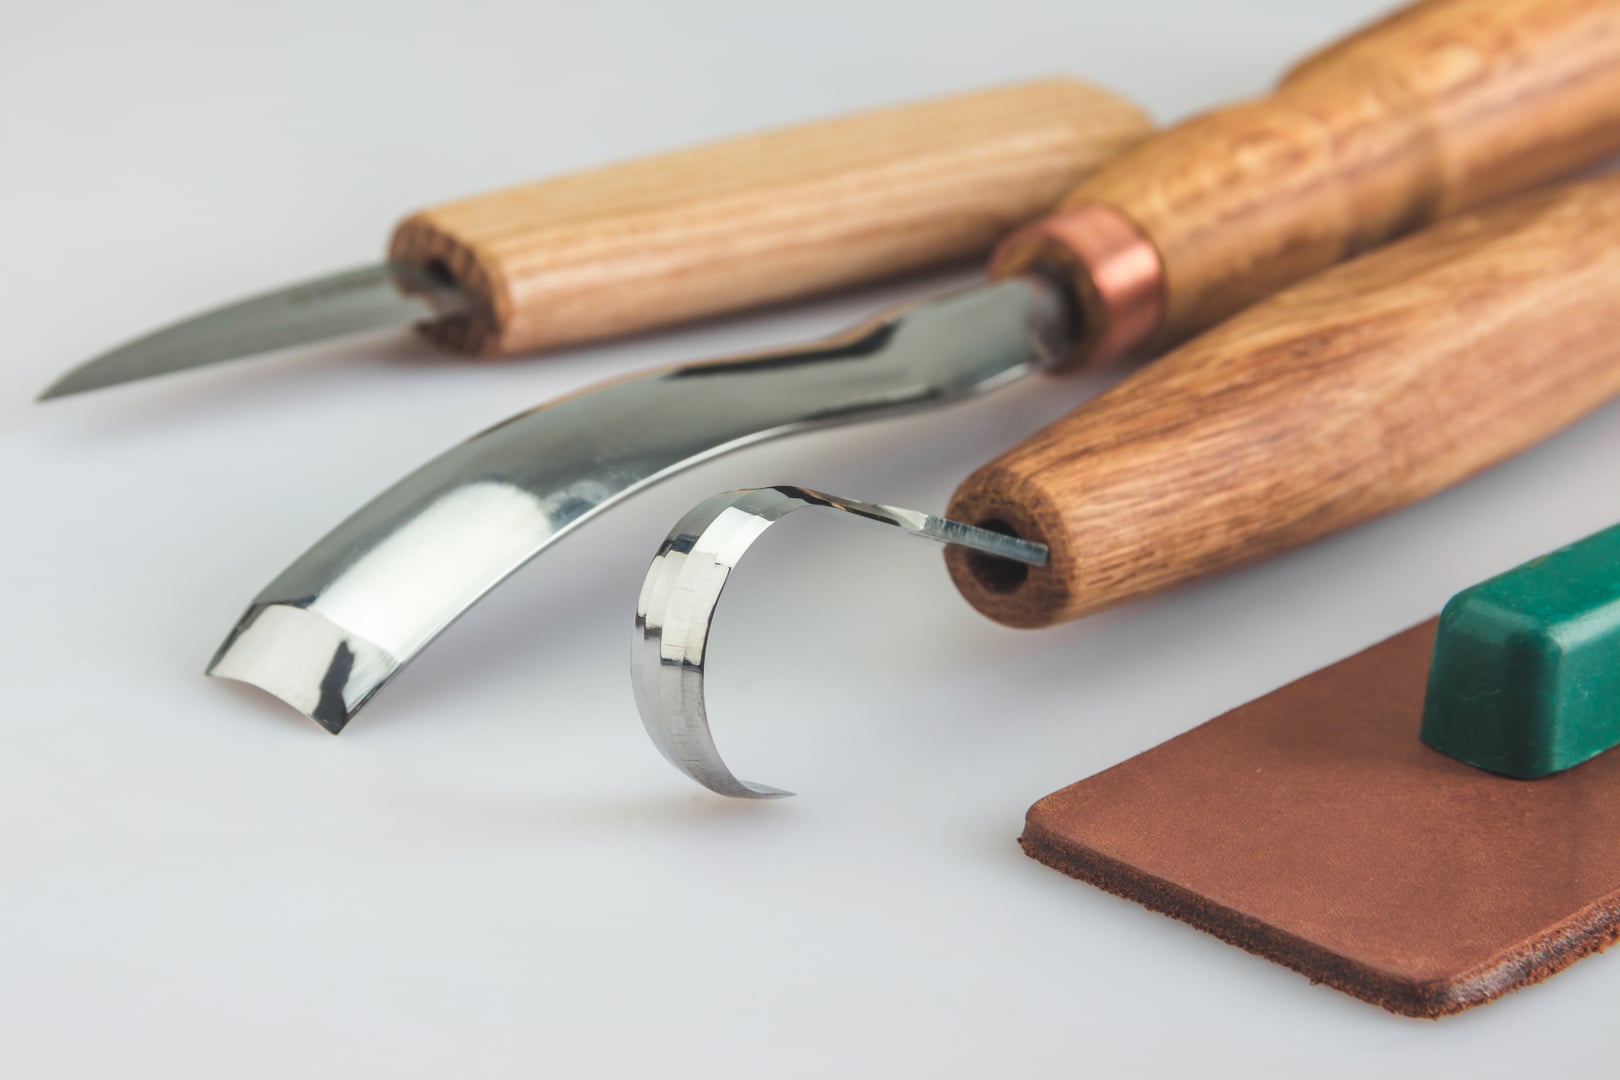 Beginner Carving Tools Kit - Unboxing the Beavercraft Woodcarving Kit. 